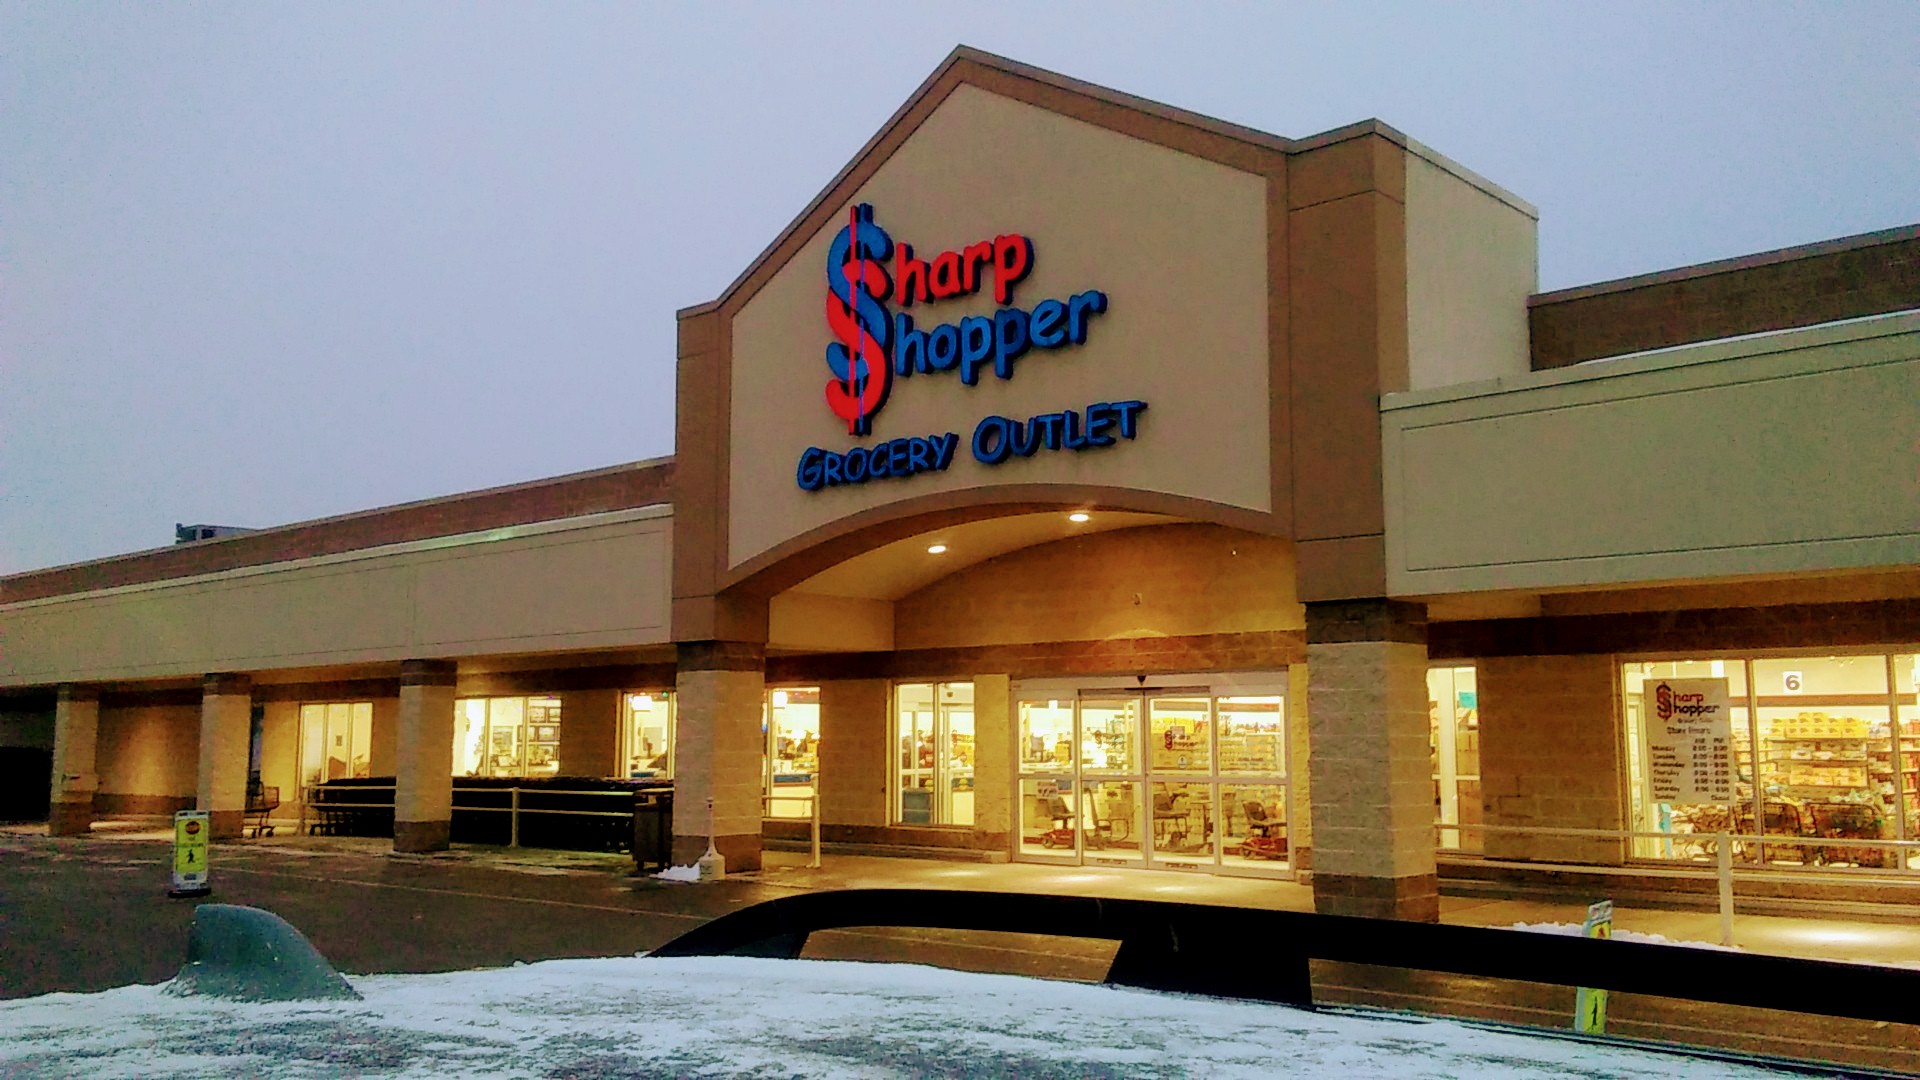 Sharp Shopper Grocery Outlet